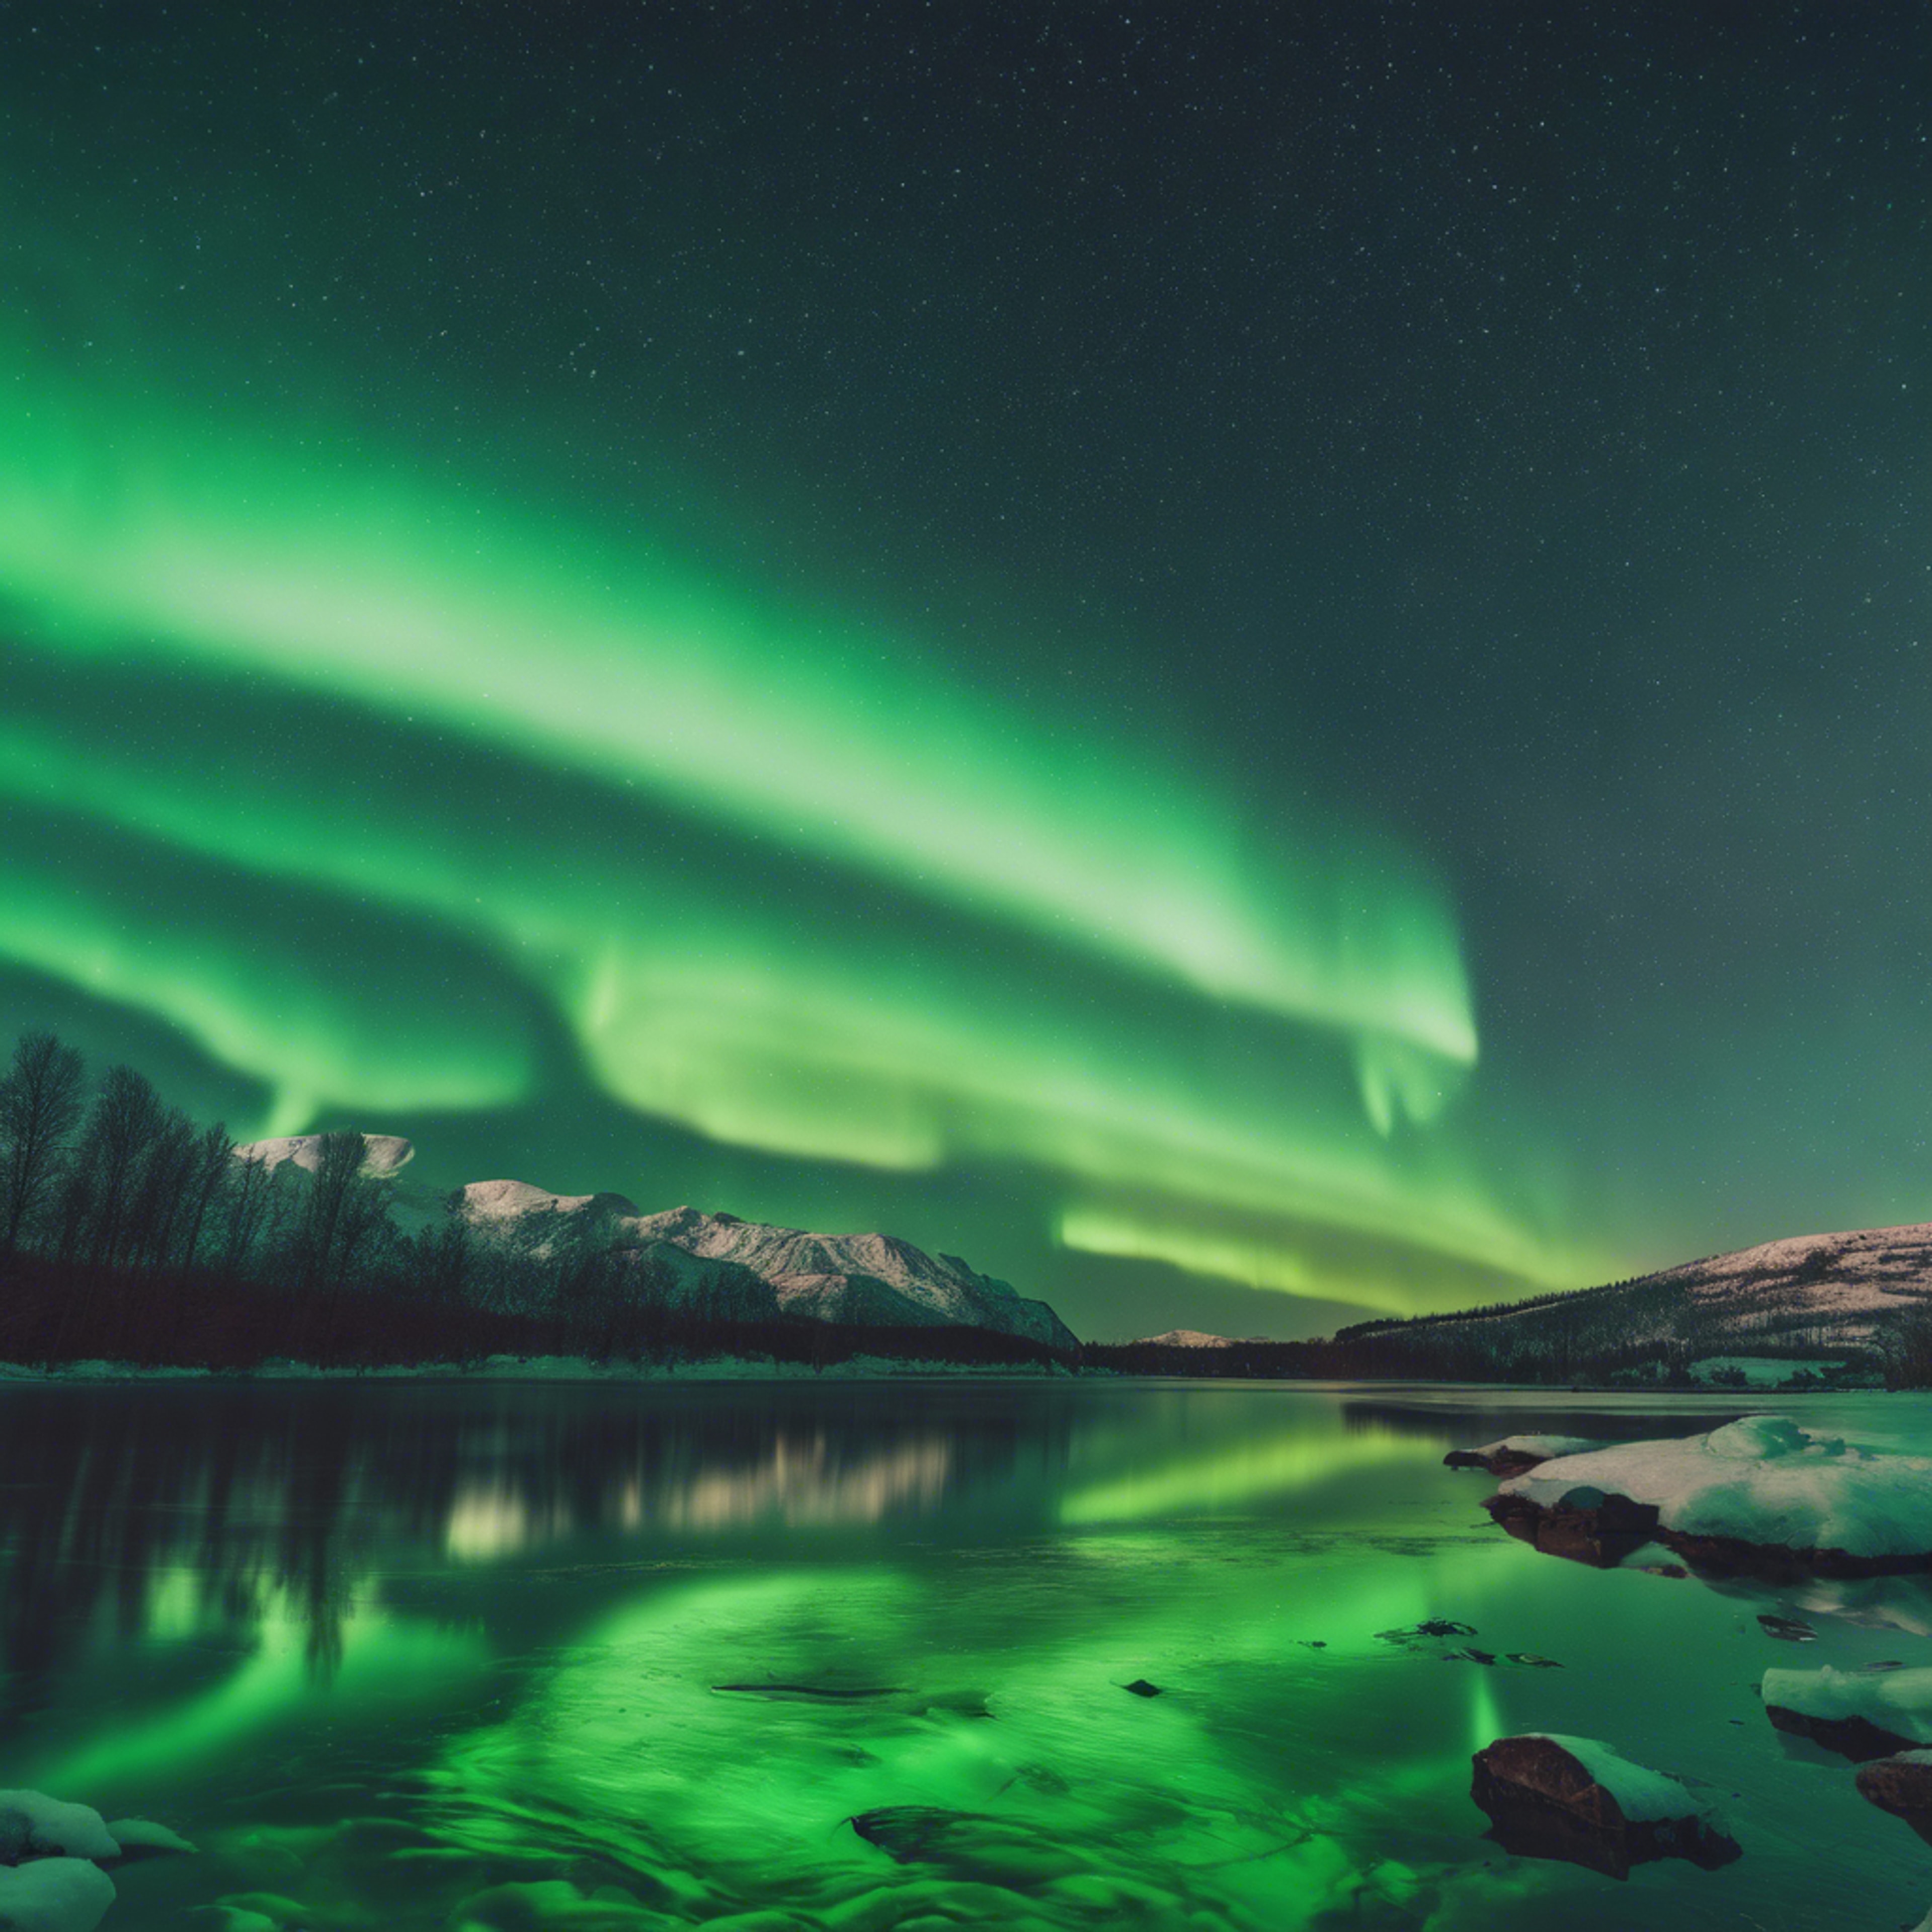 Cool green aurora borealis in the night sky. Tapeta[6739bc2aef4a46929ef0]